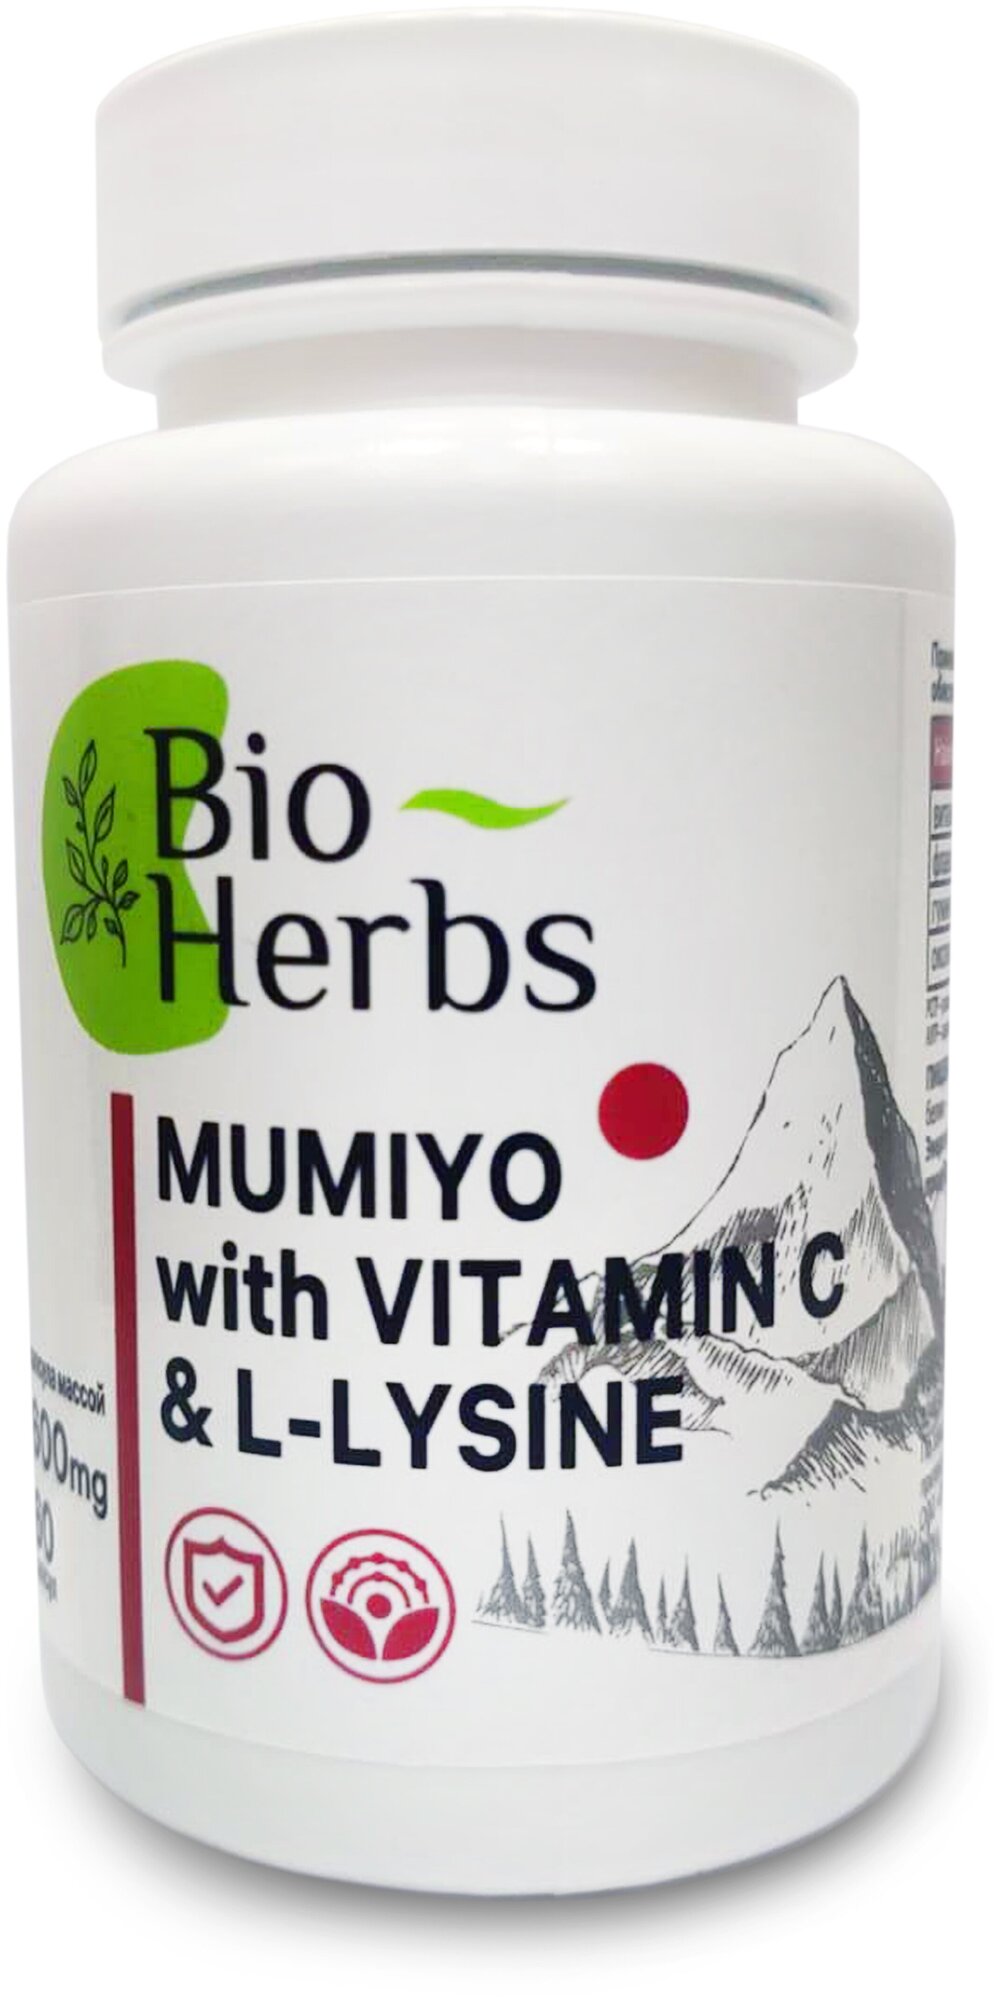 MUMIYO with VITAMIN C & L-LYSINE - для профилактики остеопороза; ANTI-AGE; БАД для омоложения кожи; 600мг 60 капсул.